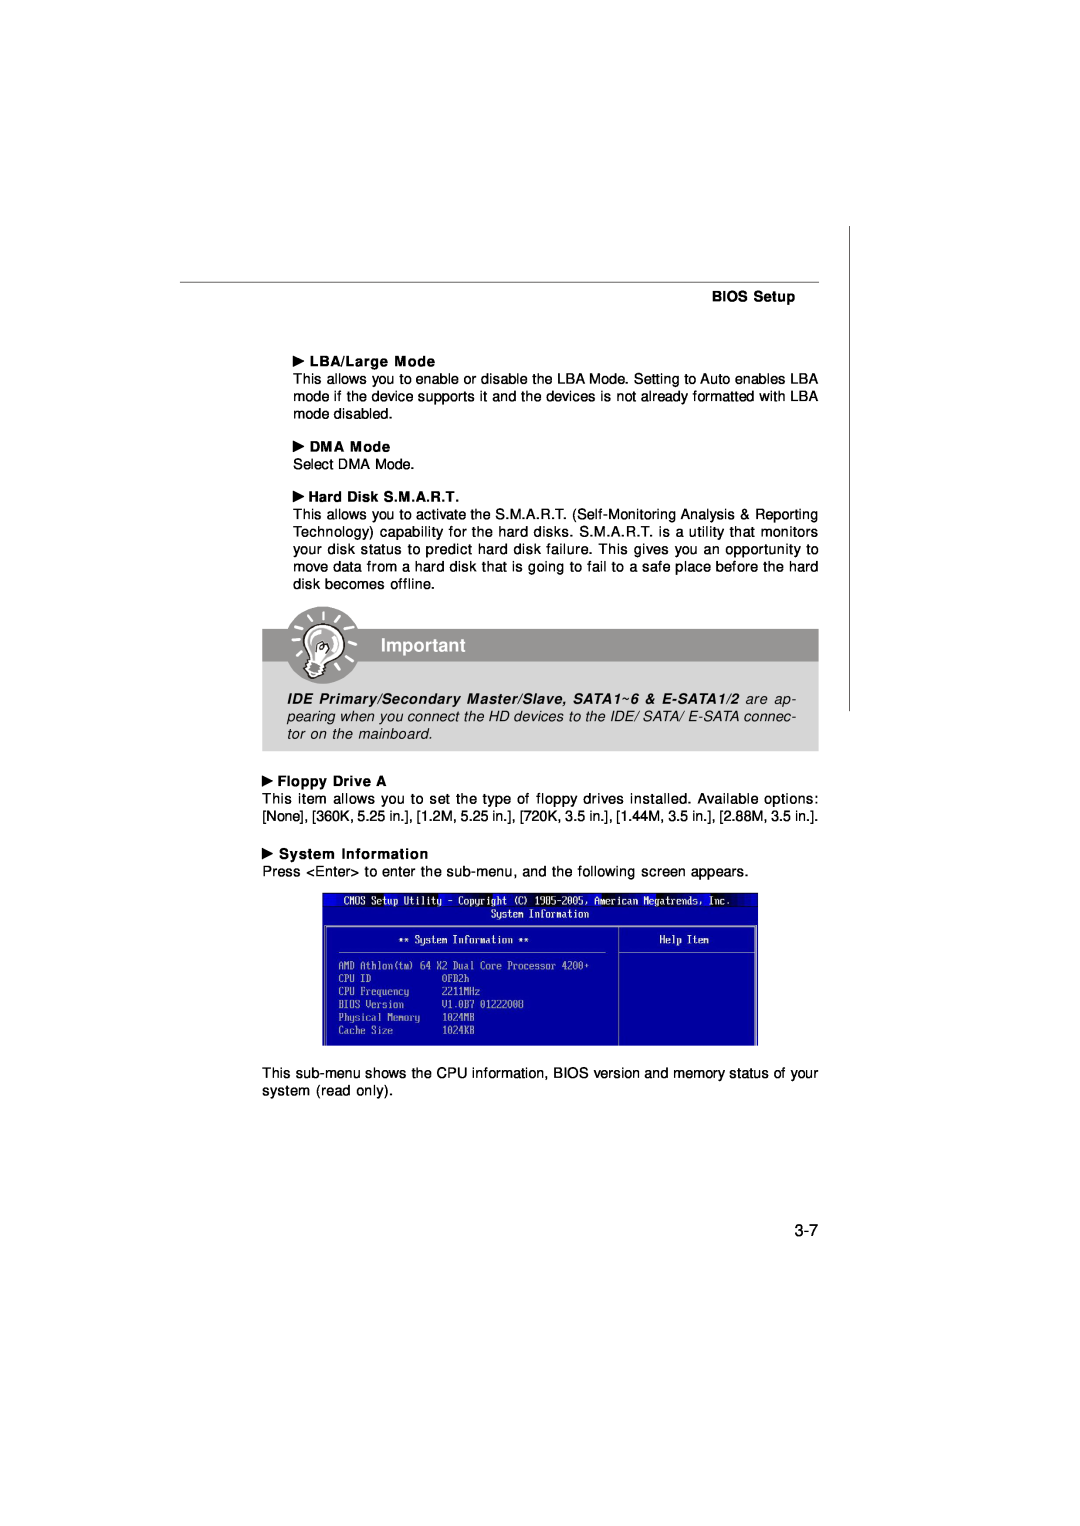 Nvidia MS-7374 manual BIOS Setup LBA/Large Mode, DMA Mode, Hard Disk S.M.A.R.T, Floppy Drive A, System Information 